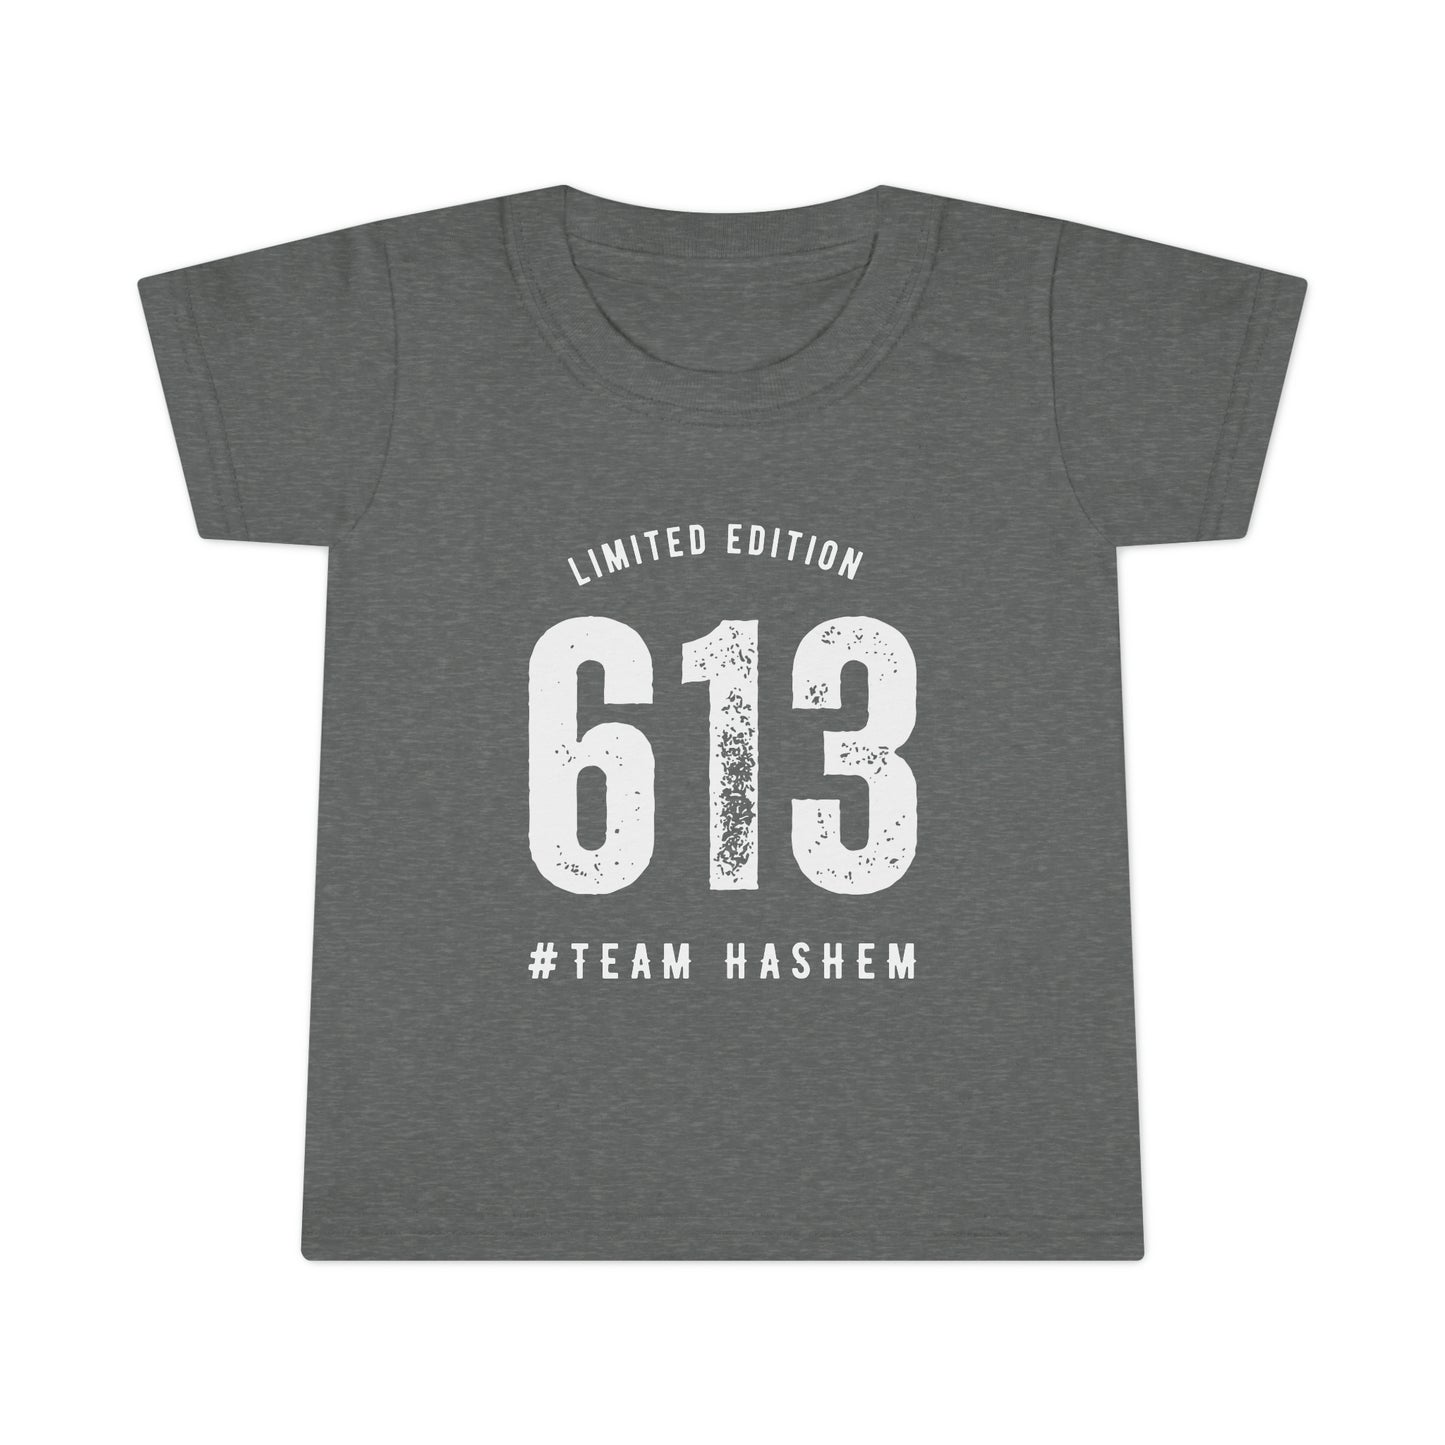 Toddler's 613 Team Hashem t-shirt